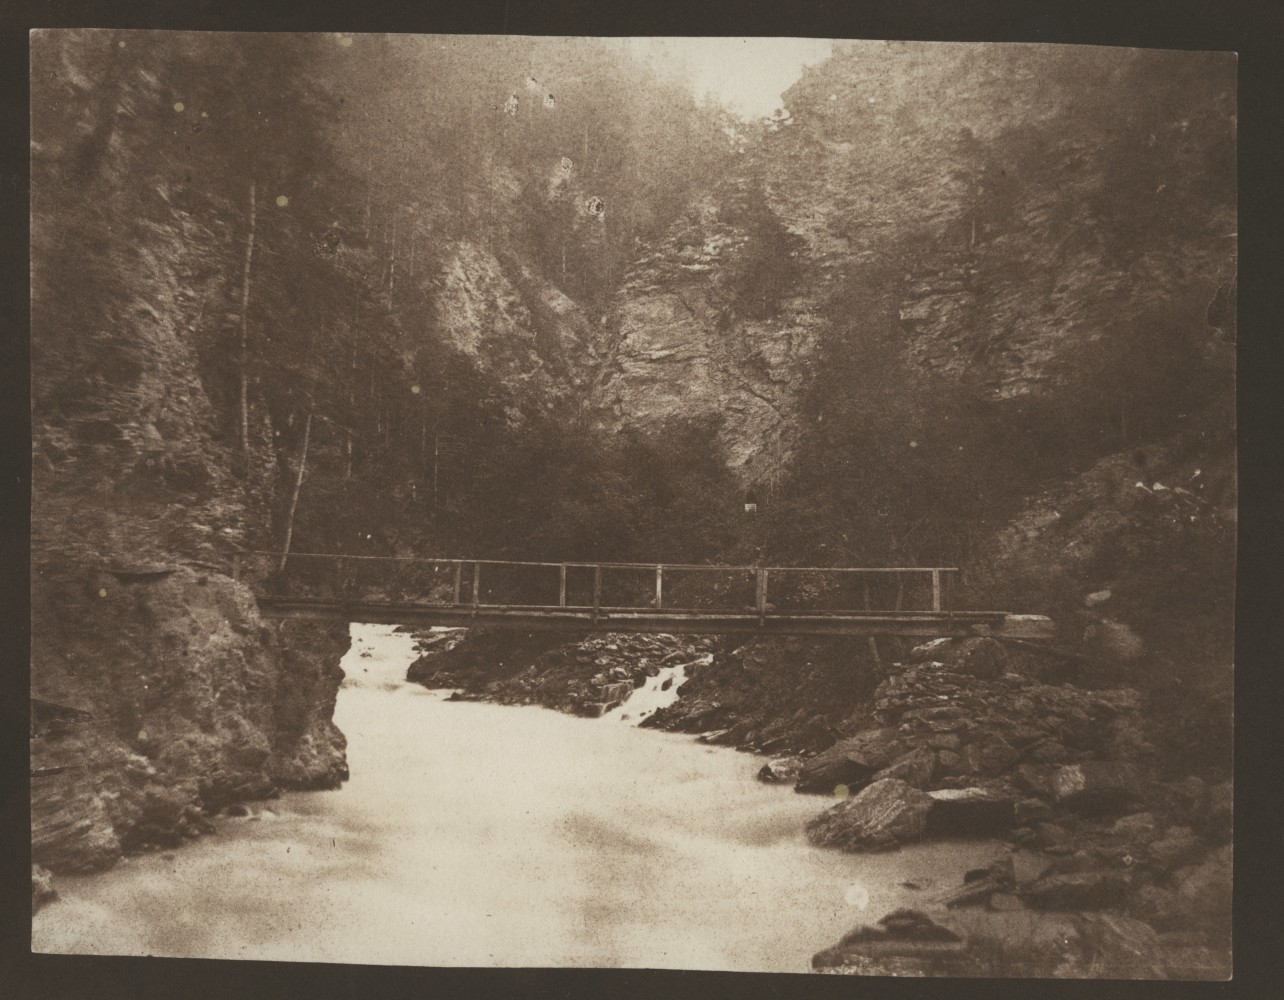 William Henry Fox TALBOT (English, 1800-1877) Rustic bridge across a gorge, probably in Scotland, circa 1844 Salt print from a calotype negative 14.1 x 18.1 cm